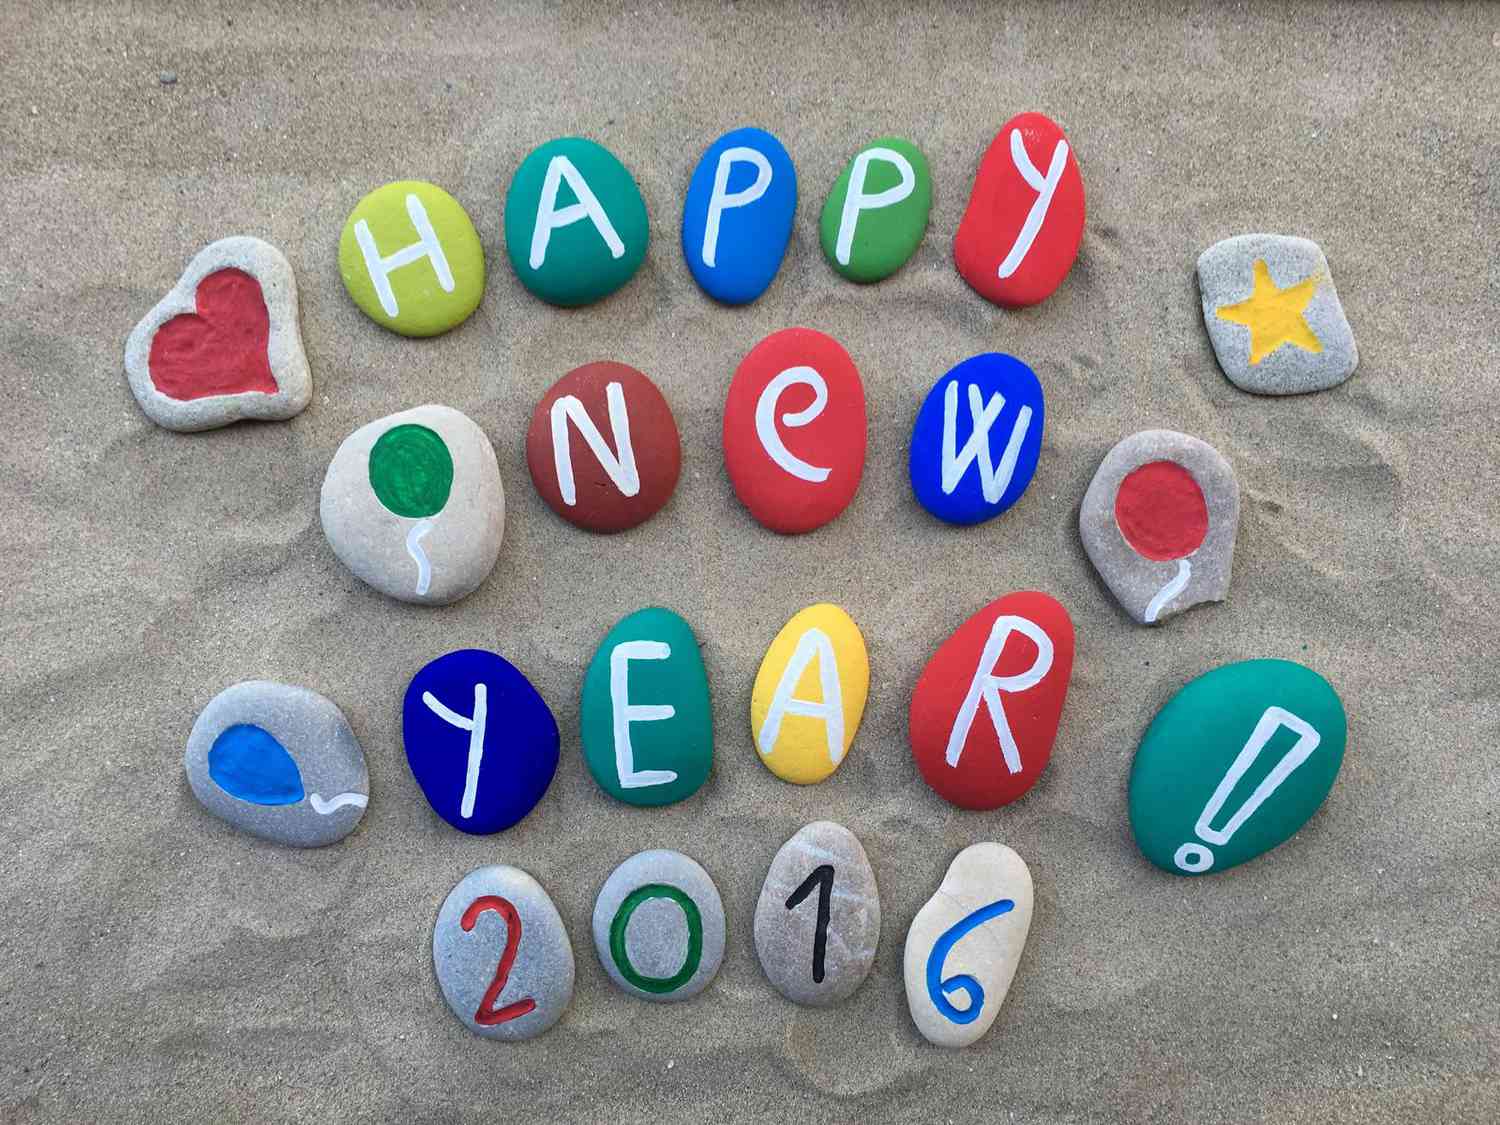 Happy New Year 2016 stones on sand